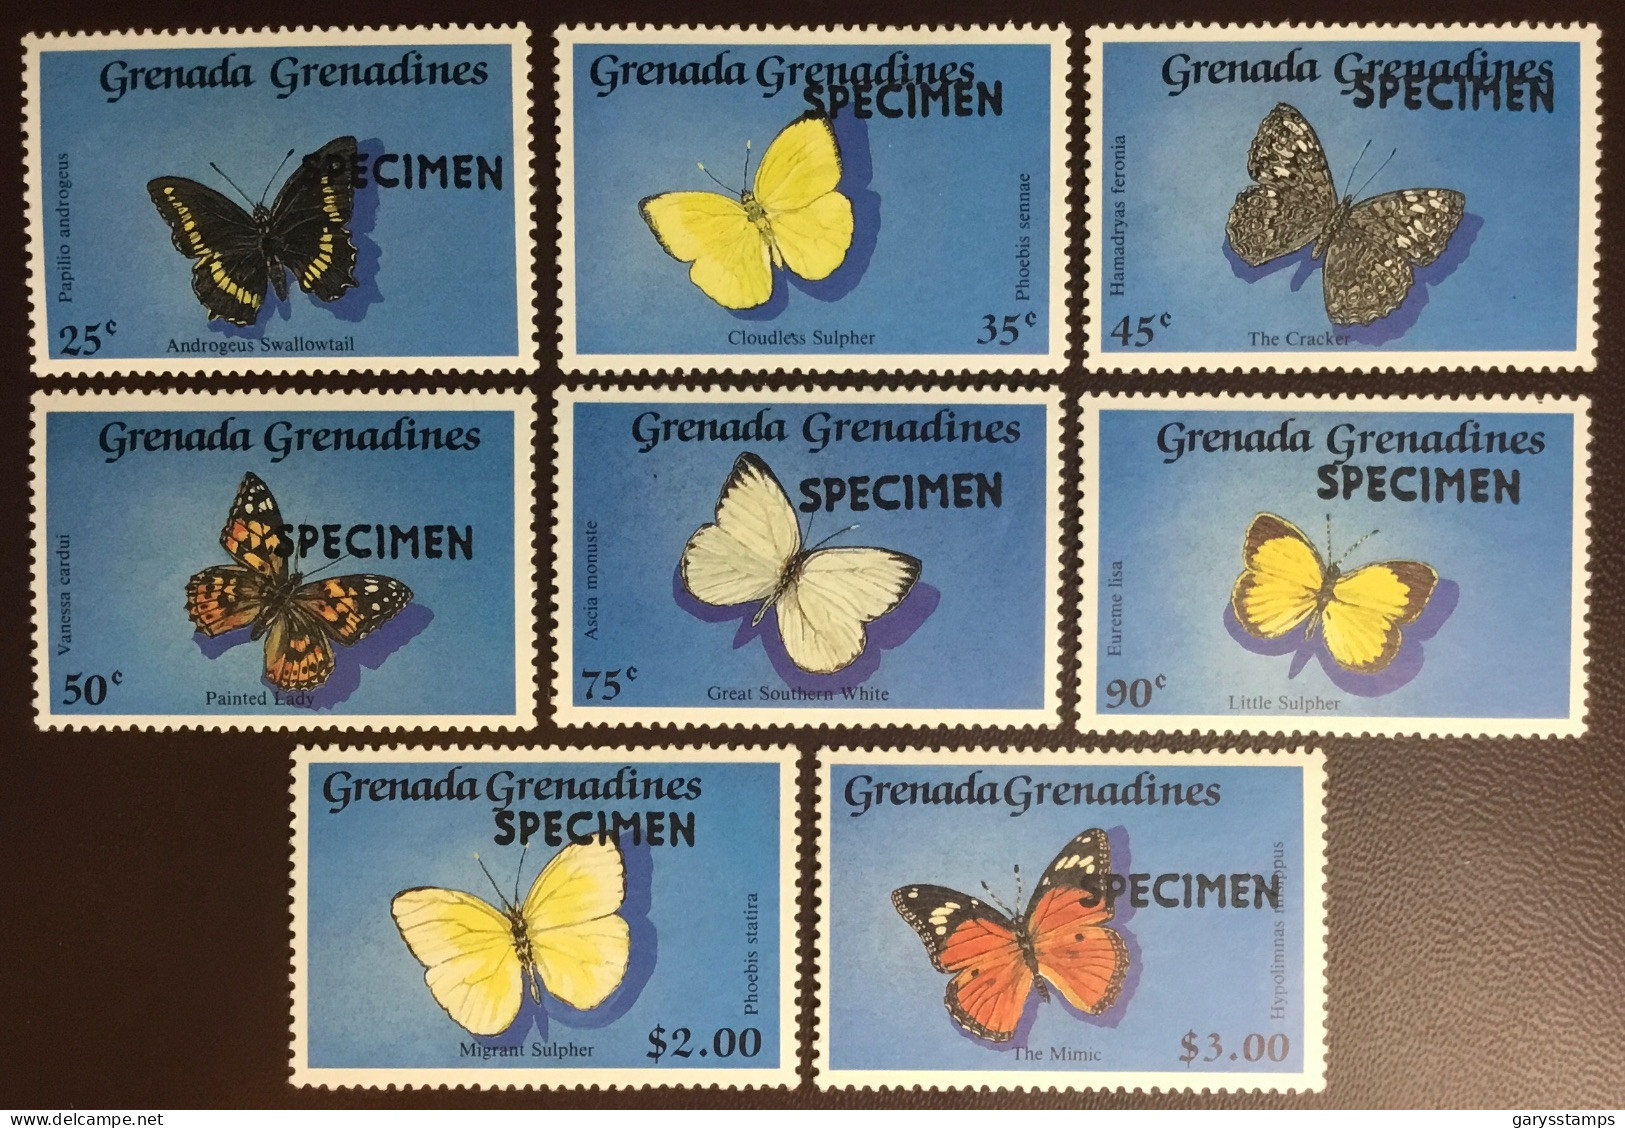 Grenada Grenadines 1989 Butterflies Specimen MNH - Mariposas